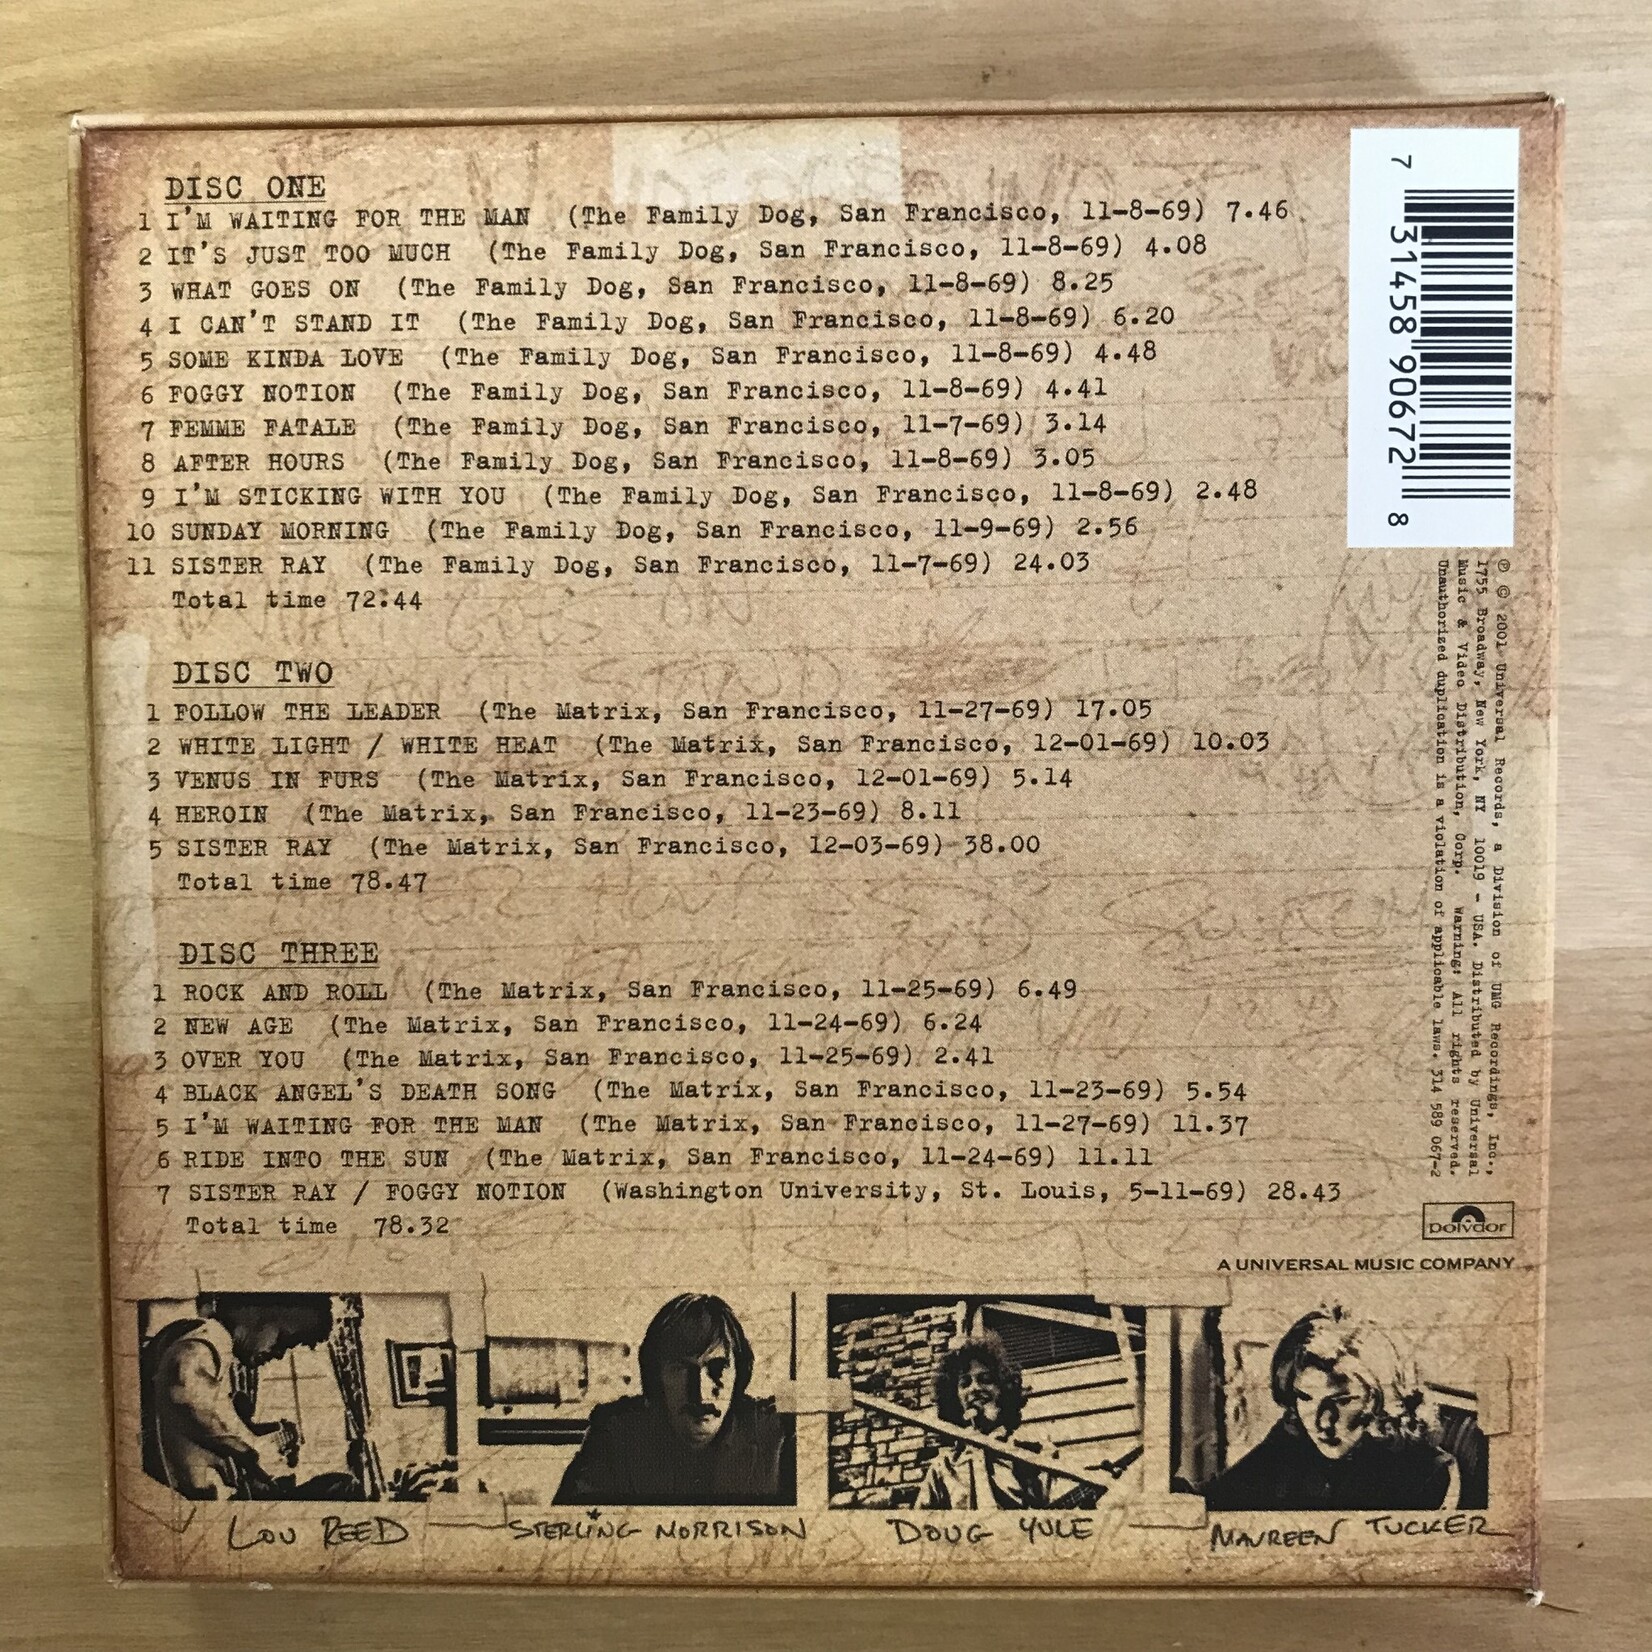 Velvet Underground - Bootleg Series Volume 1: The Quine Tapes - CD (USED)